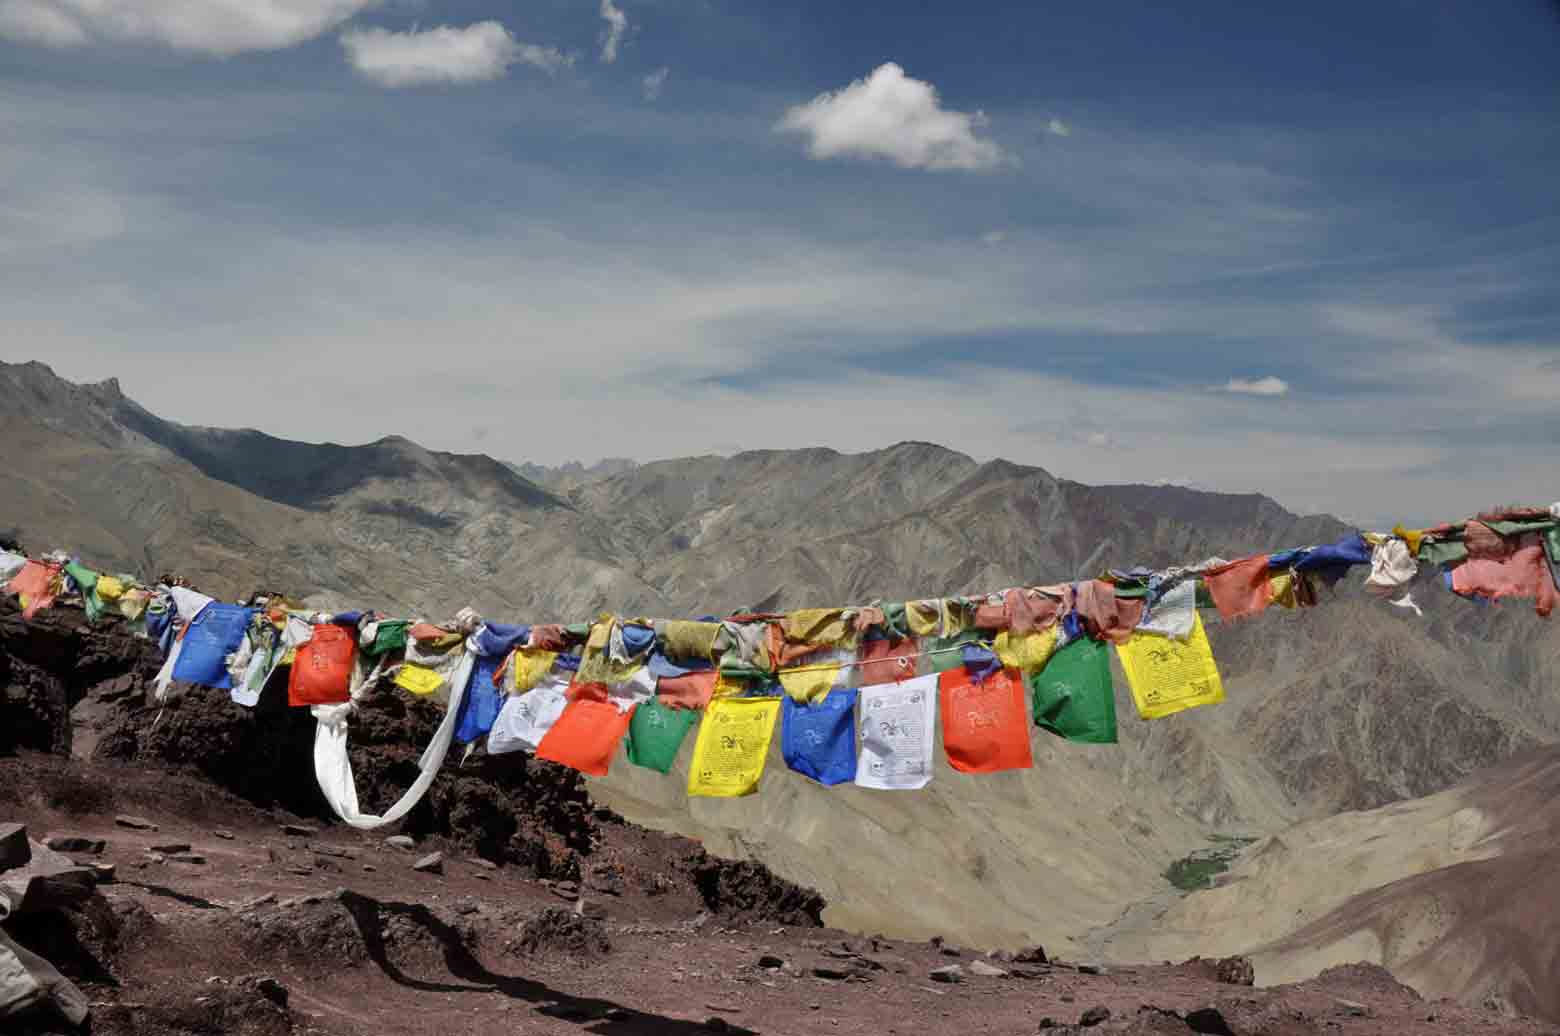 Ladakh: terra di meraviglie Himalayane